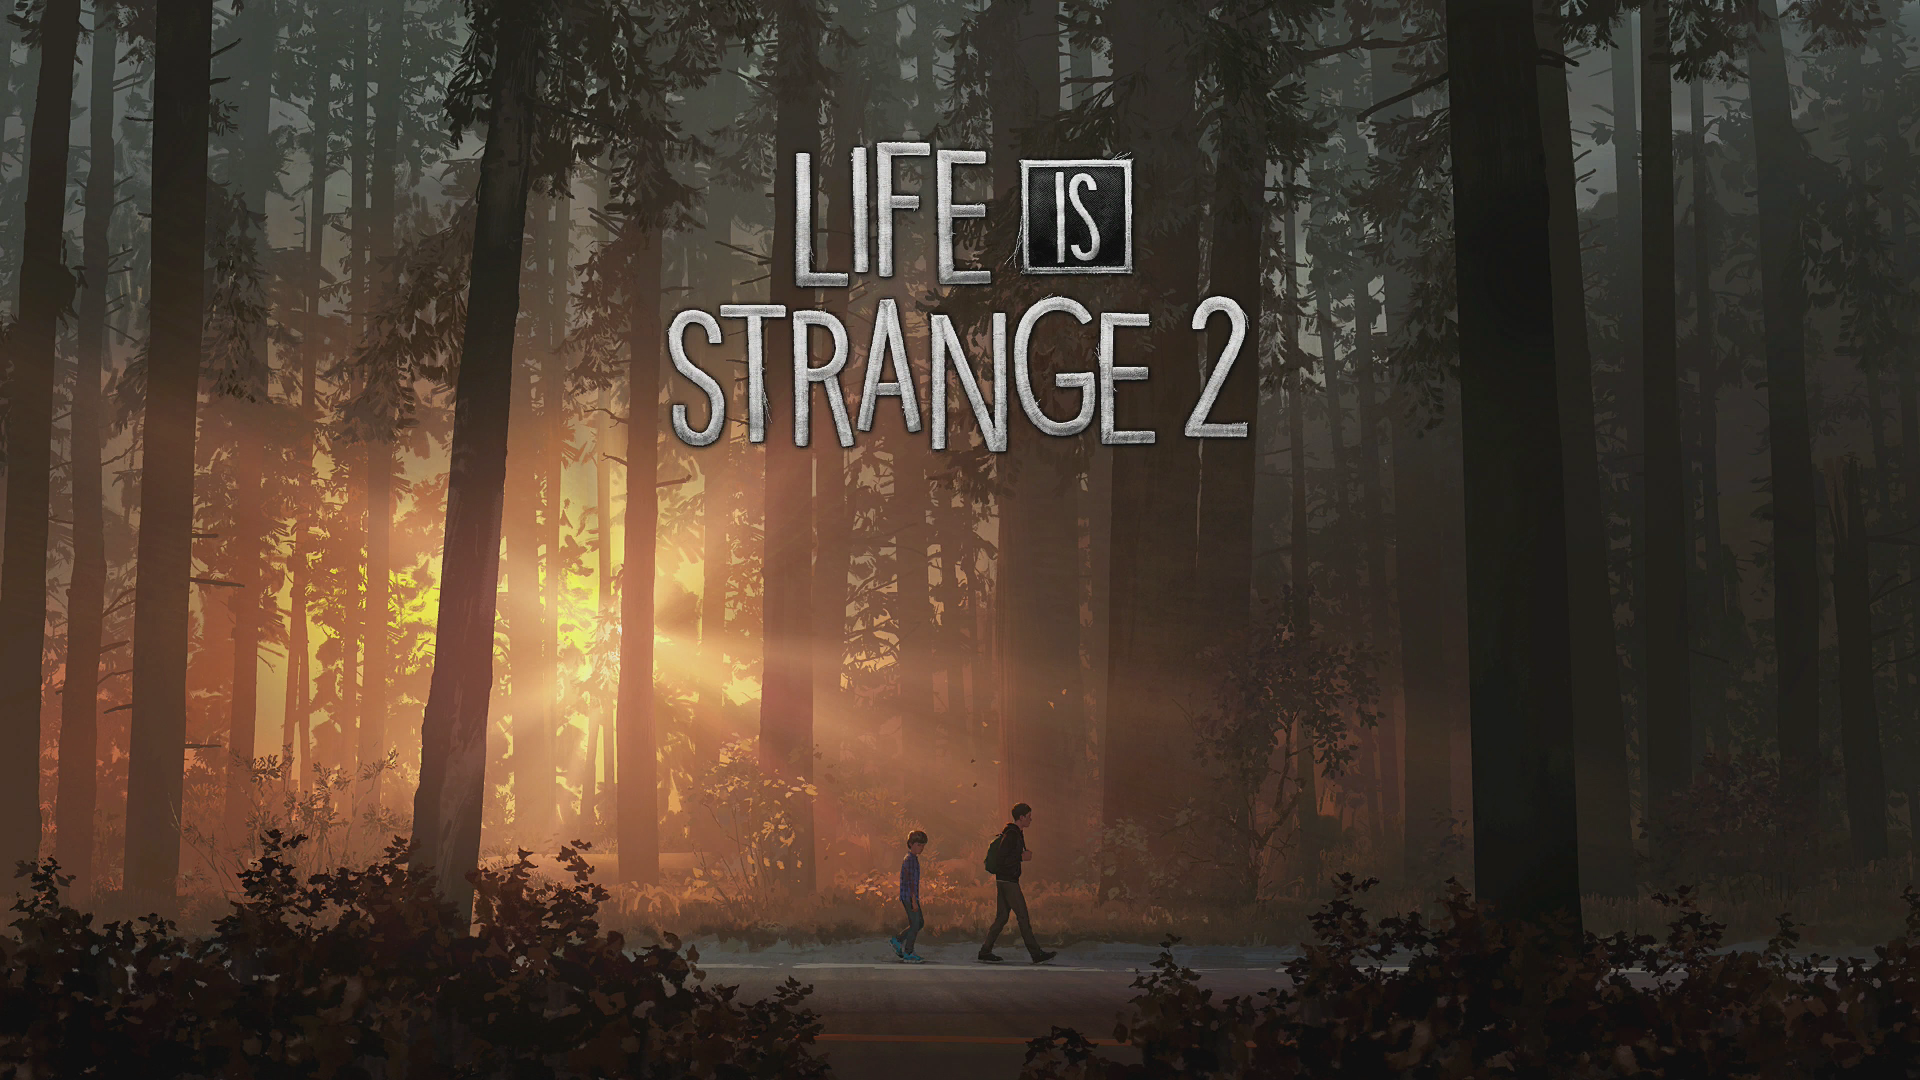 Life is Strange 2 Screen Shot 9:25:18, 6.34 PM